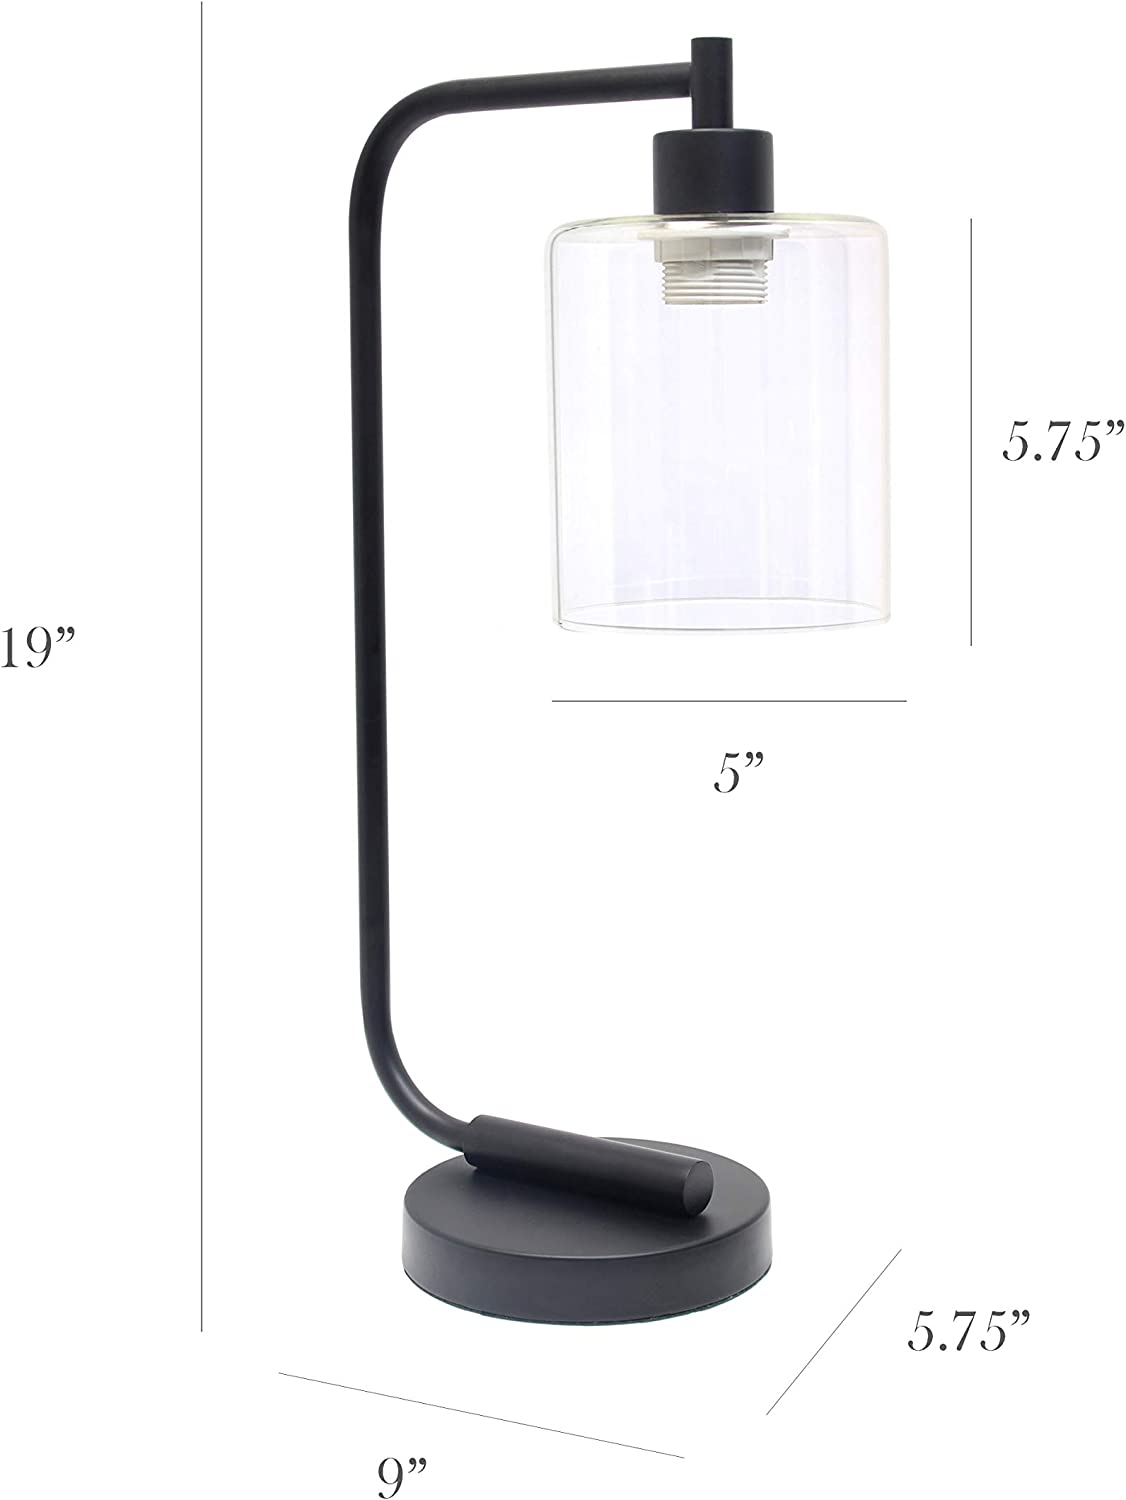 Simple Designs LD1036-BLK, Black Bronson Antique Style Industrial Iron Lantern Glass Shade Desk Lamp